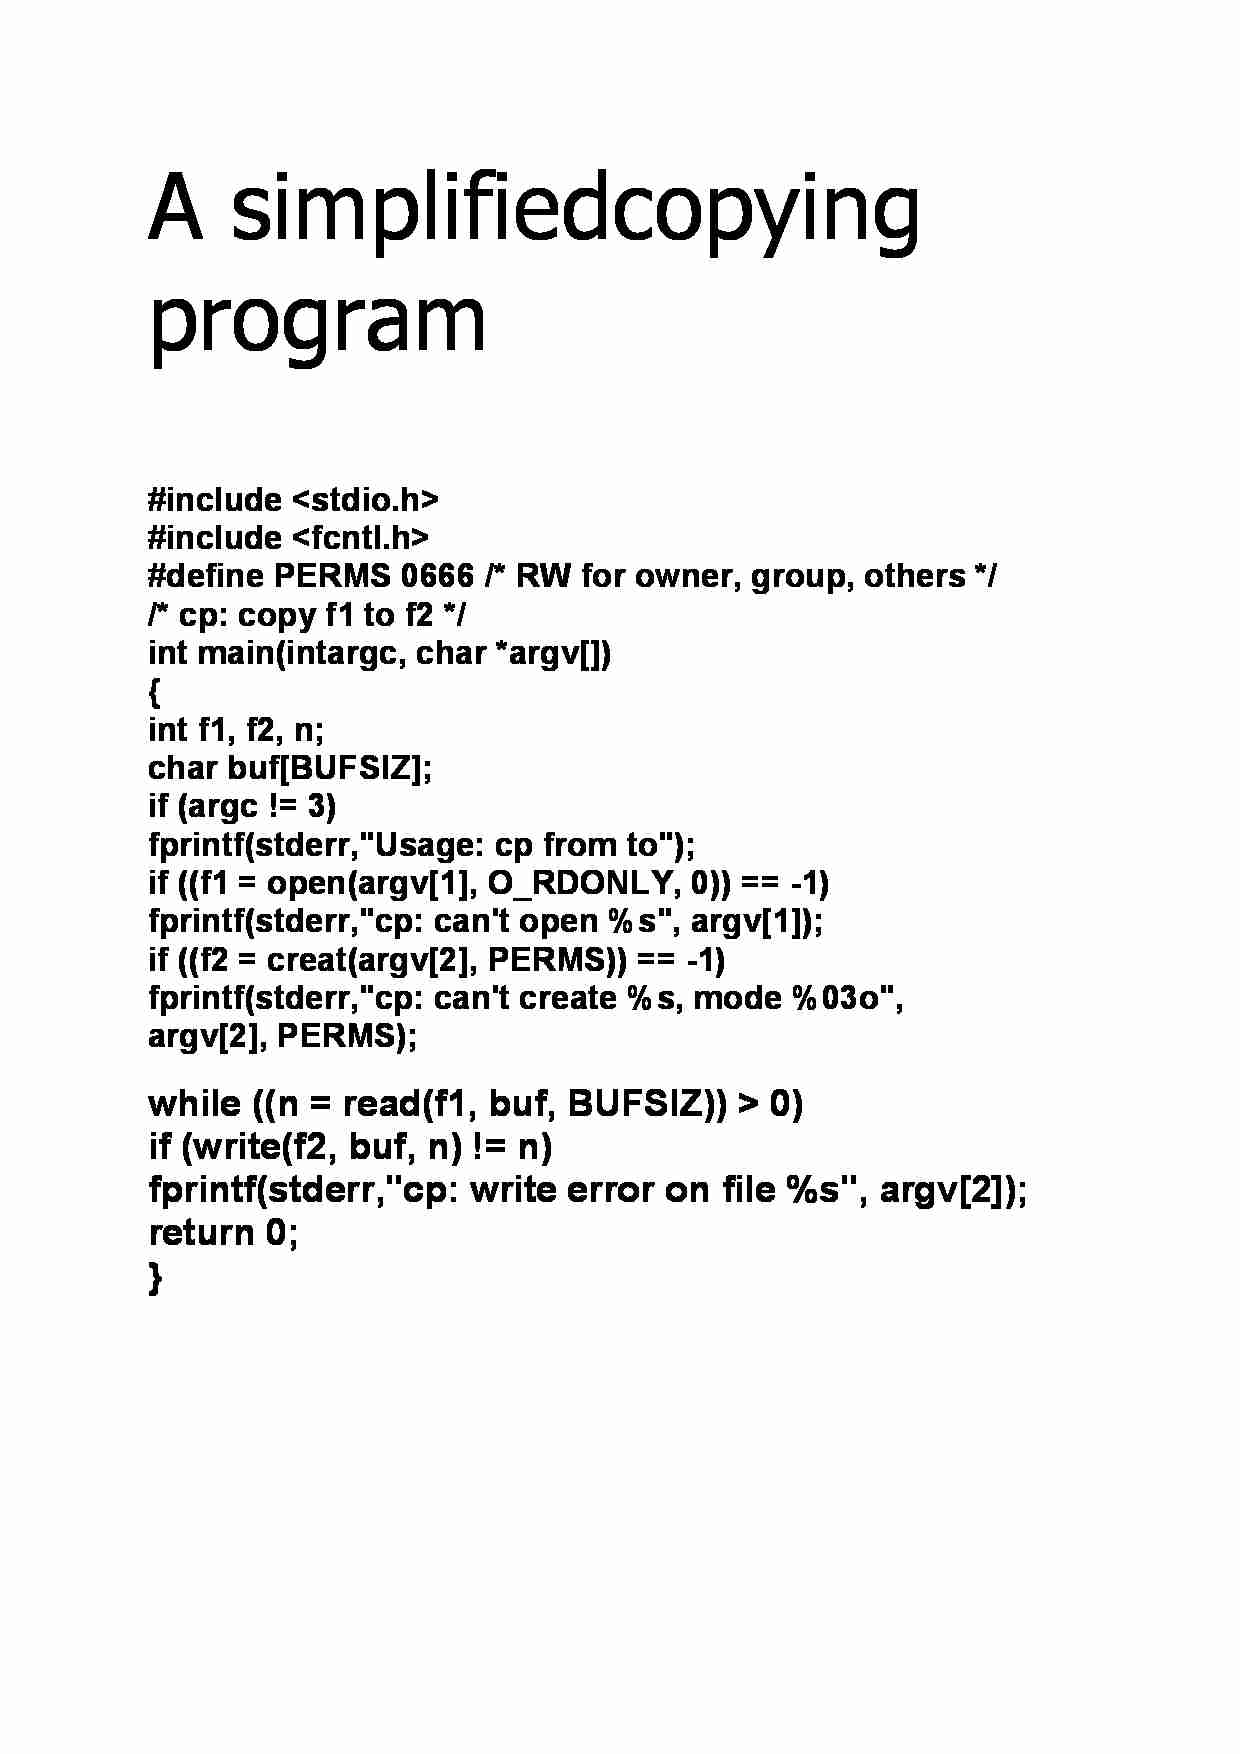 A simplified copying program - strona 1